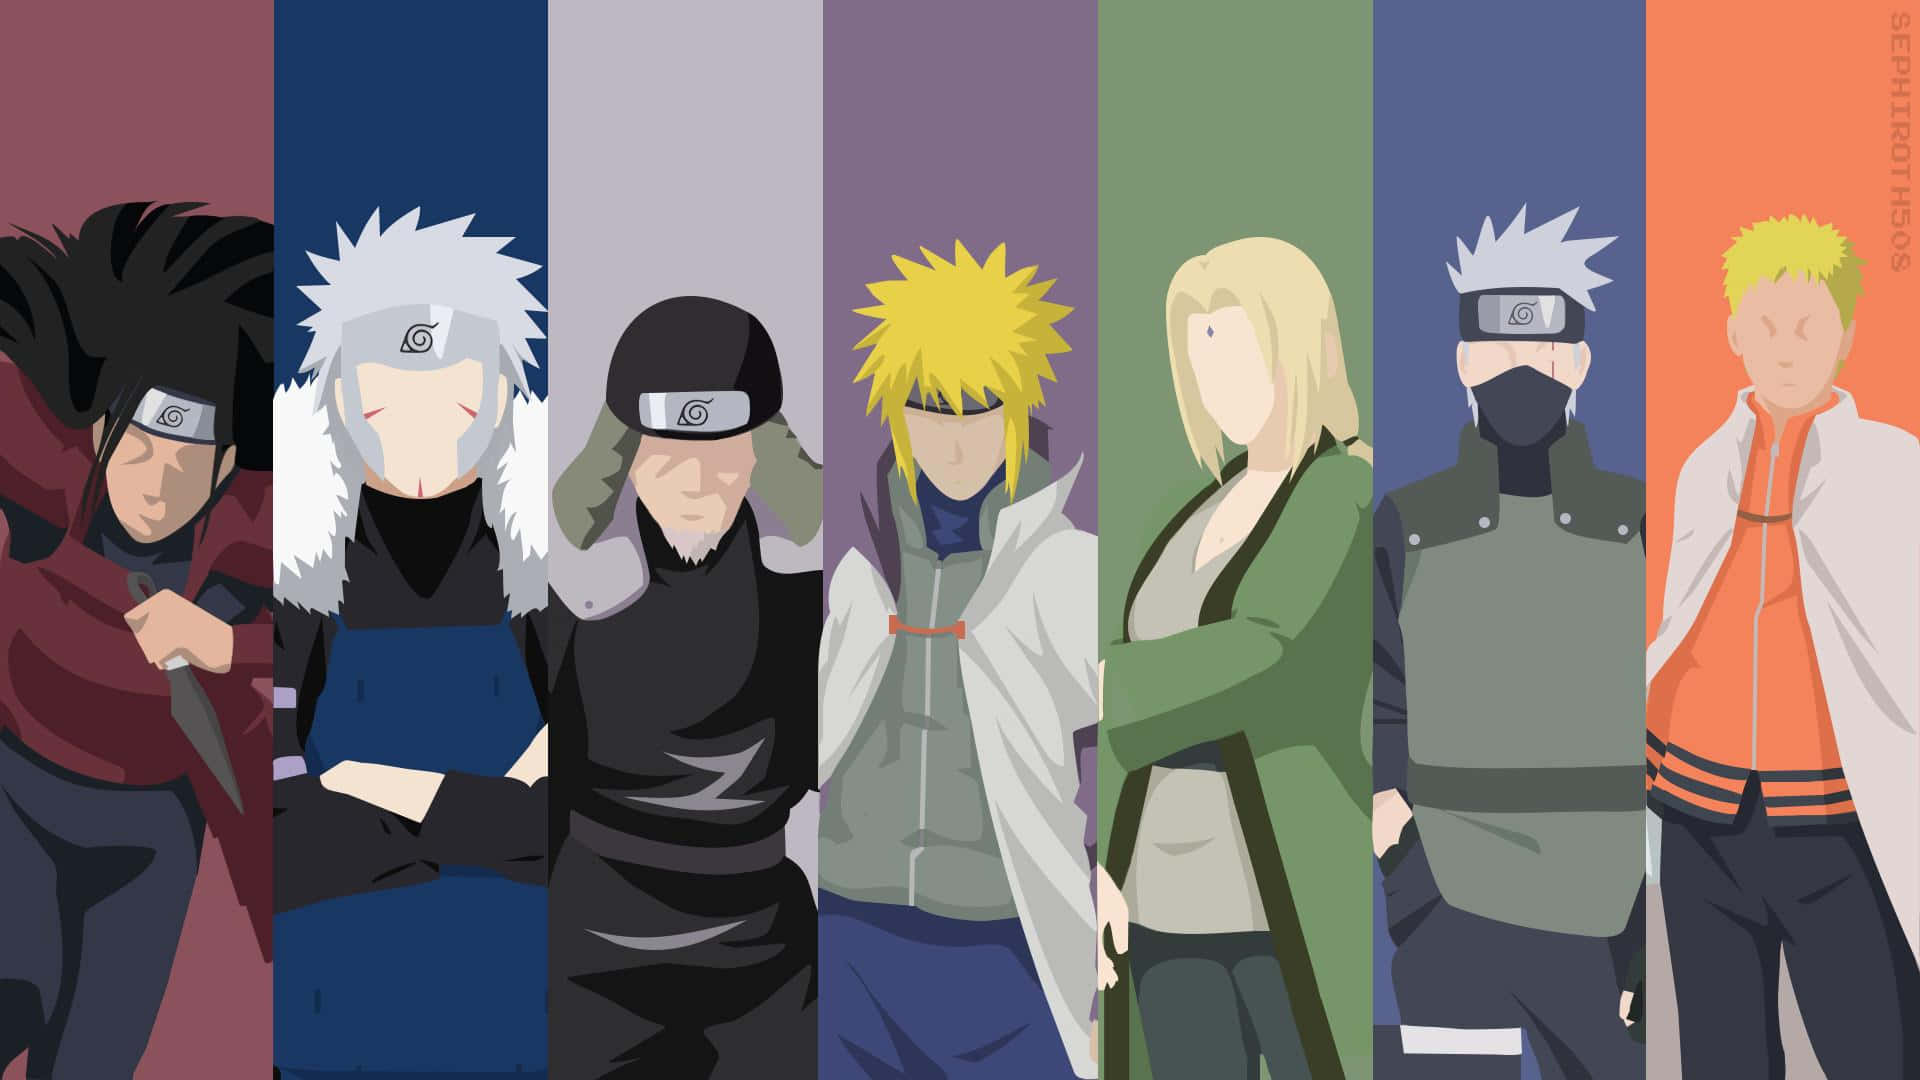 Naruto Team 7 Unites in Friendship and Adventure Wallpaper